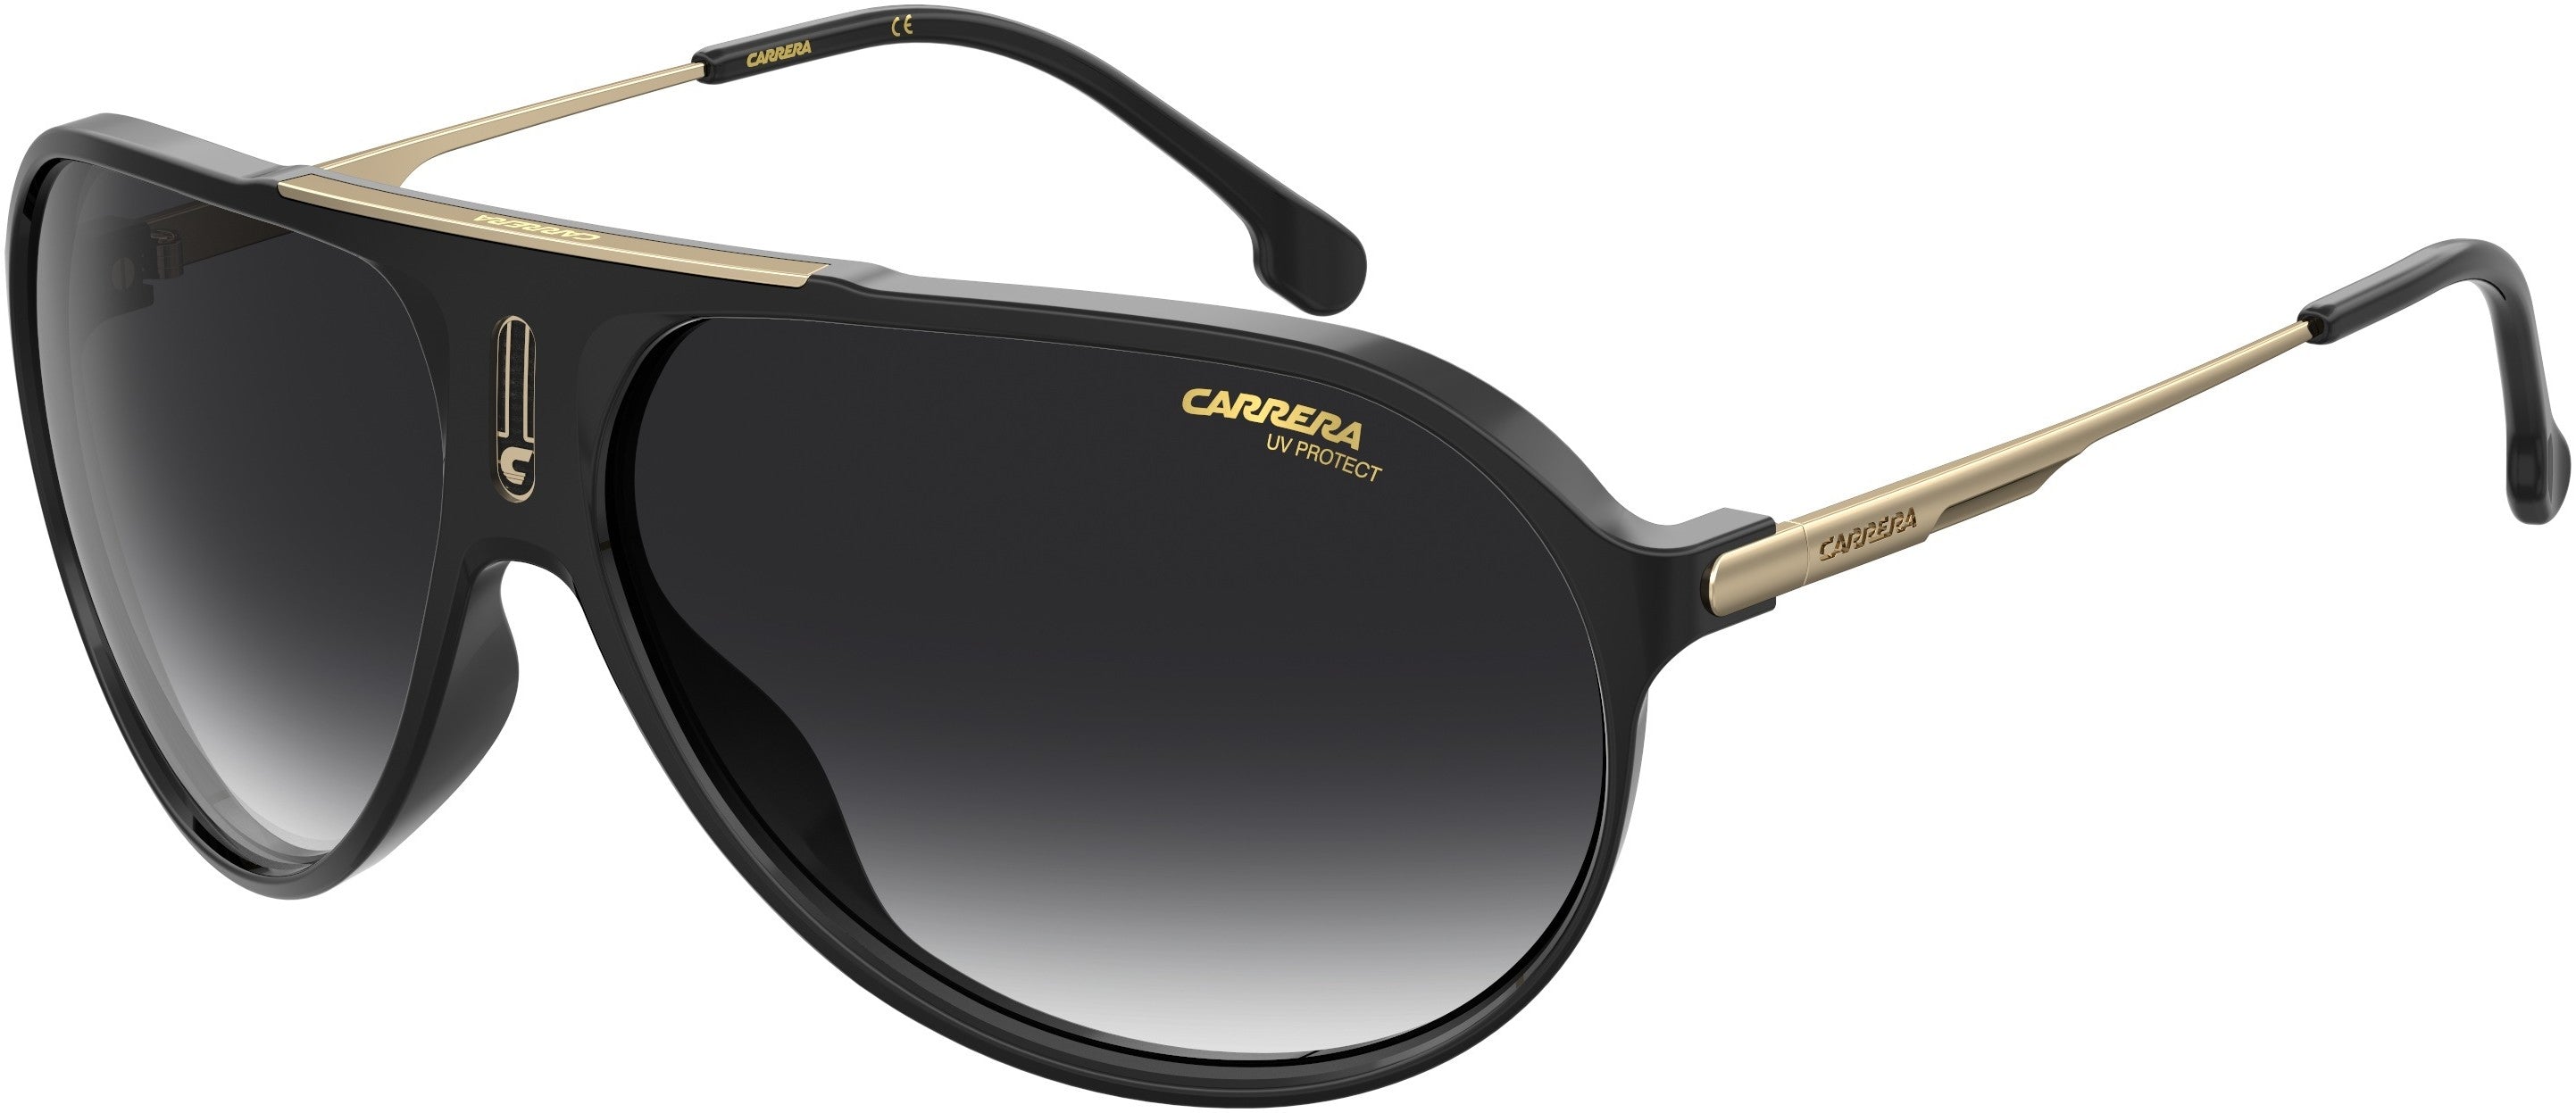 Carrera Hot 65 Aviator Sunglasses 0807-0807  Black (9O Dark Gray Gradient)